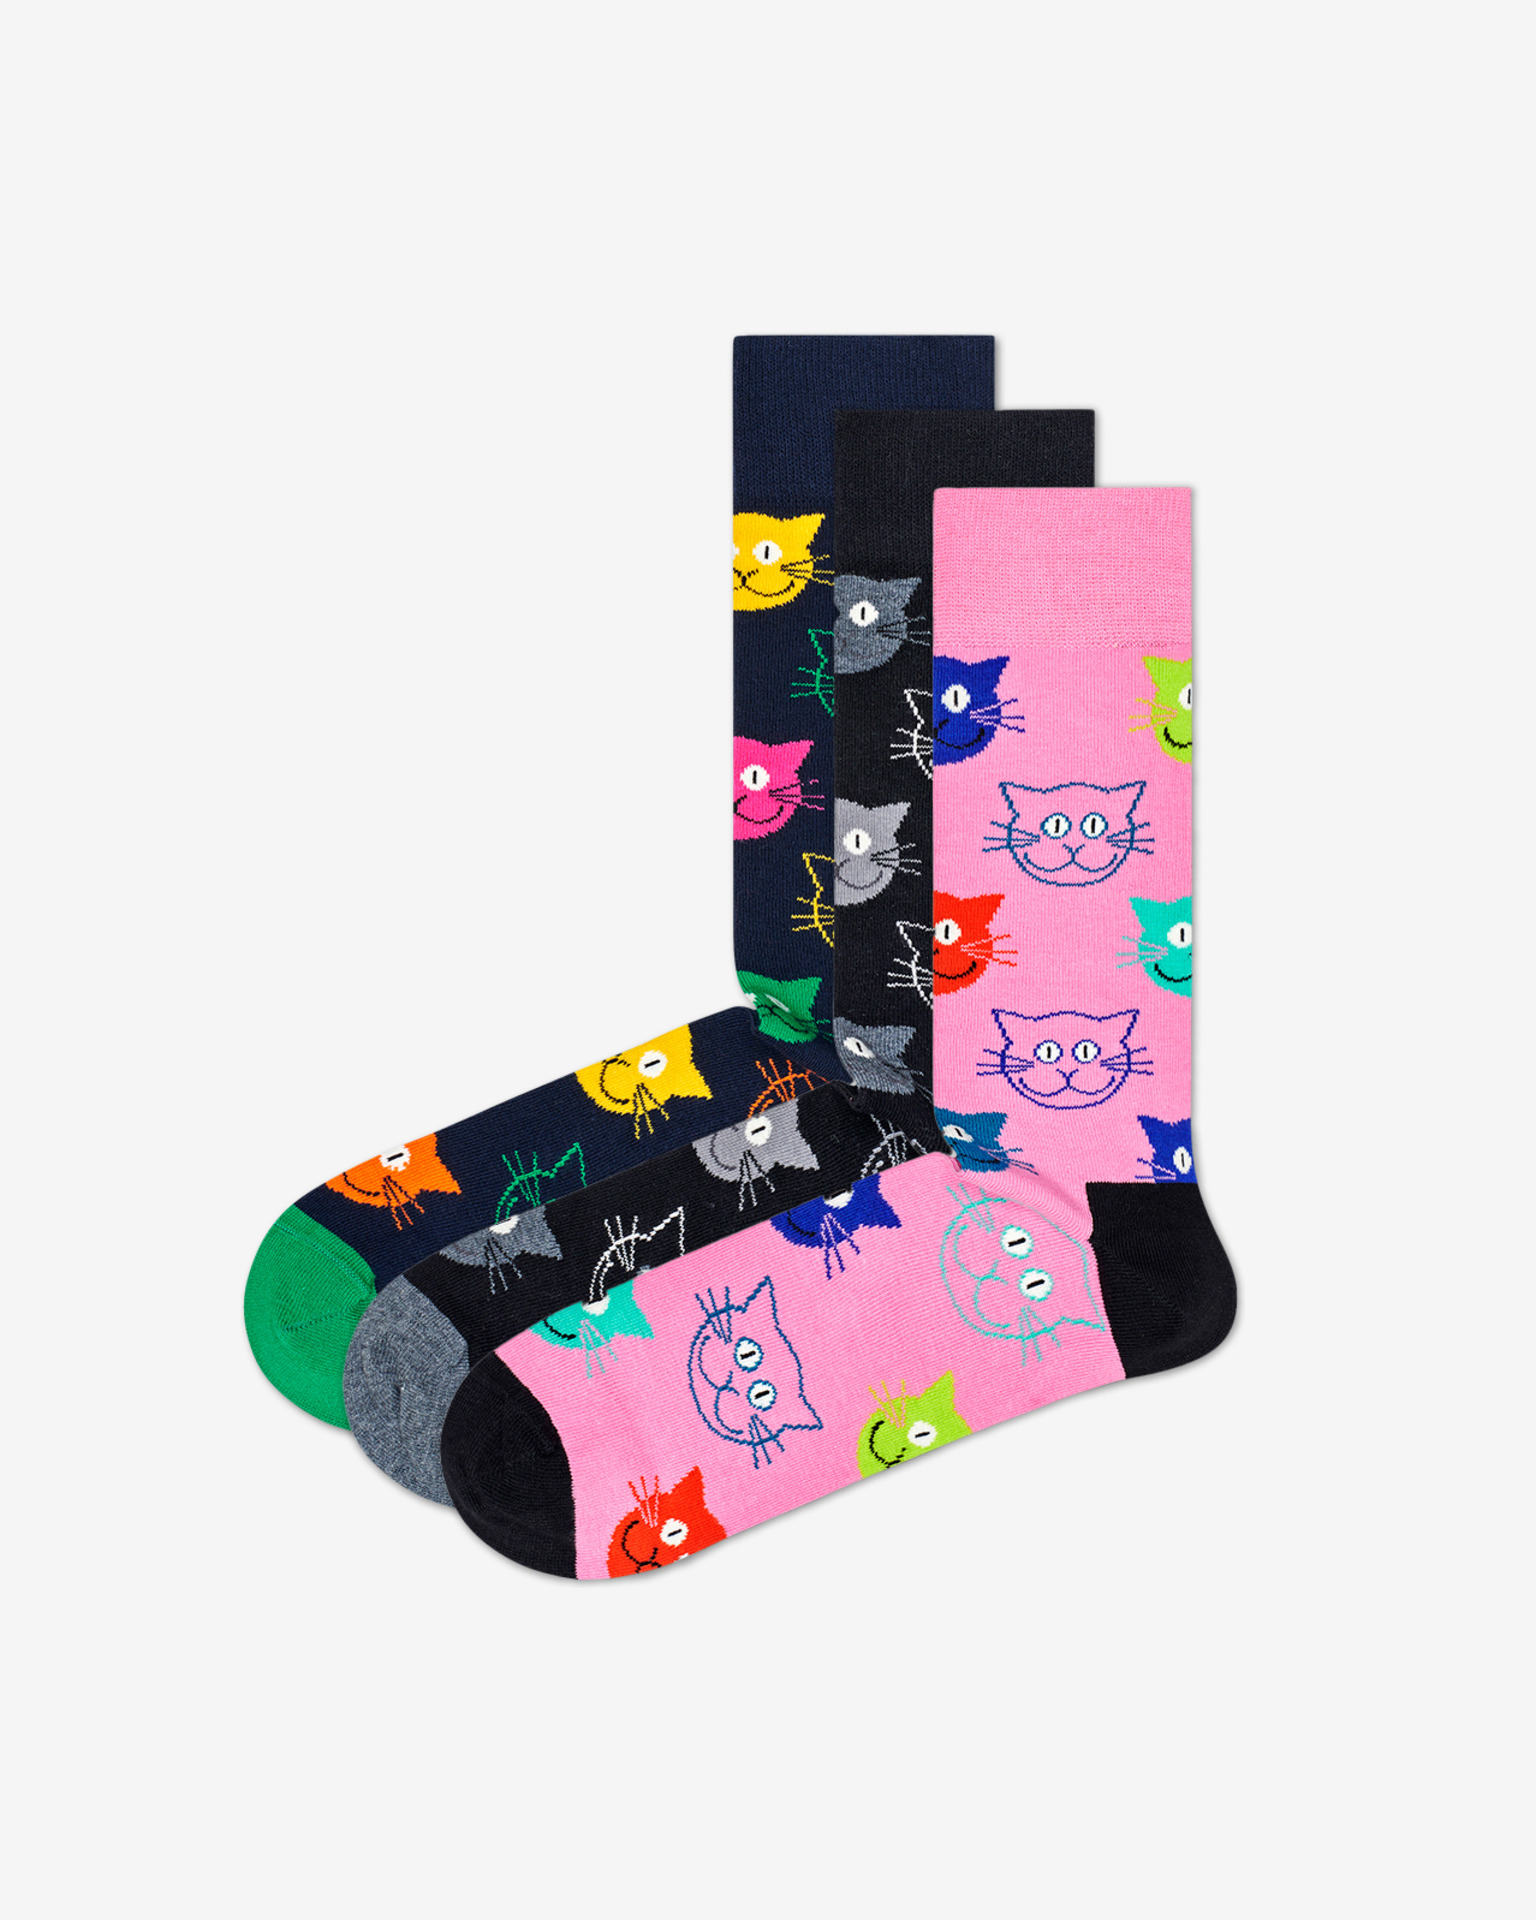 of Happy Box - Cat 3 Gift socks pairs Socks Set of